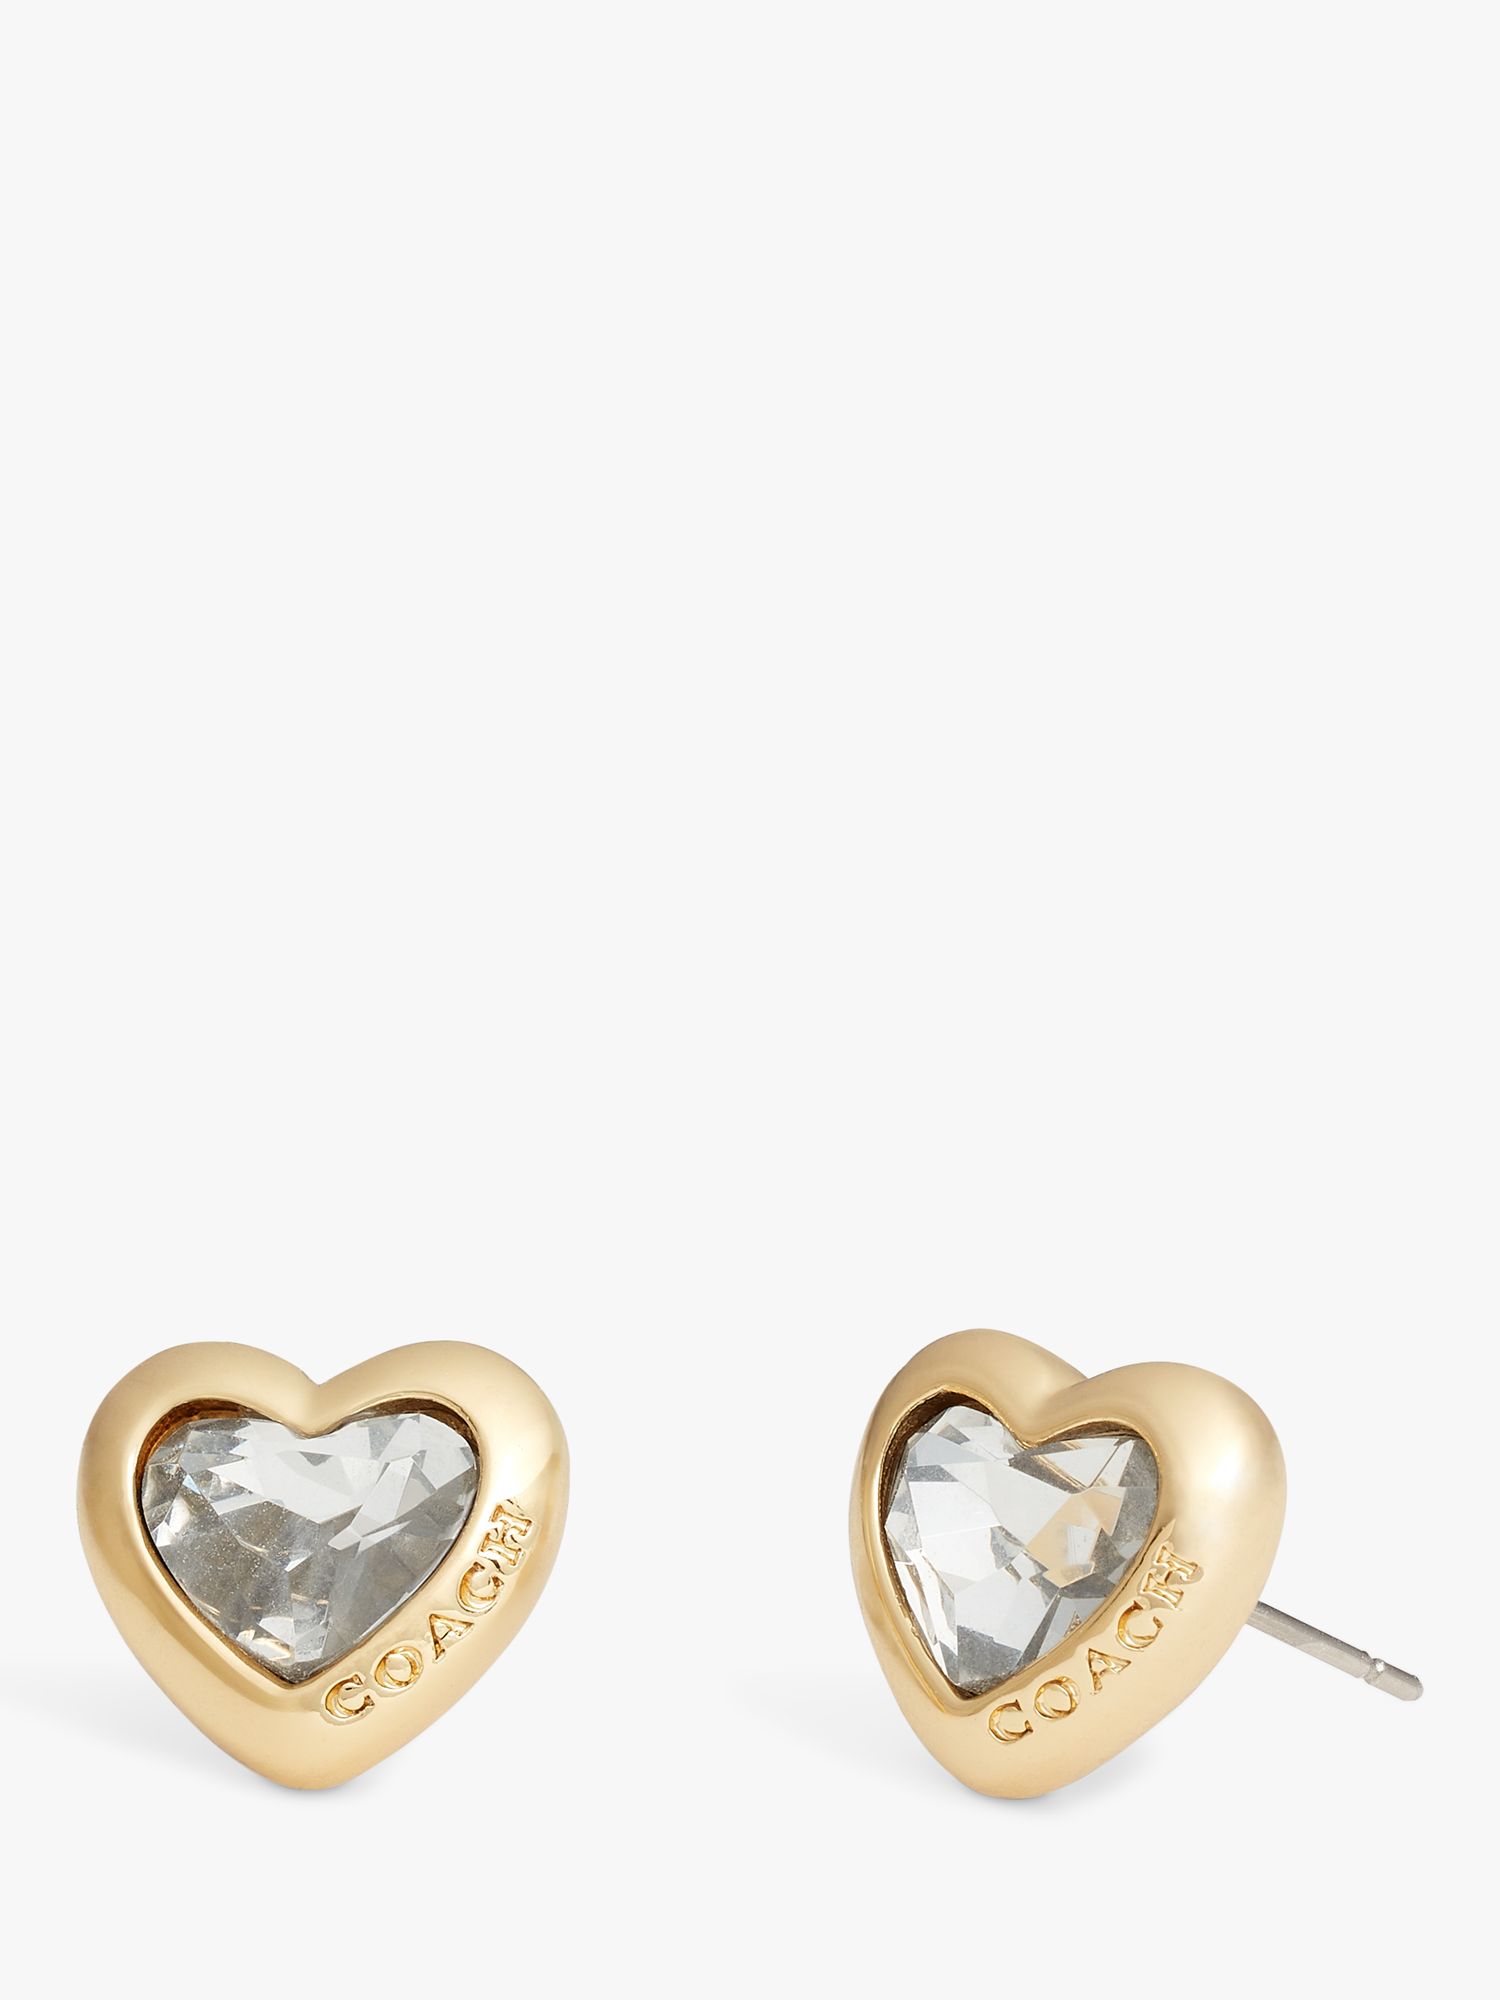 Coach Crystal Heart Logo Stud Earrings, Gold/Clear